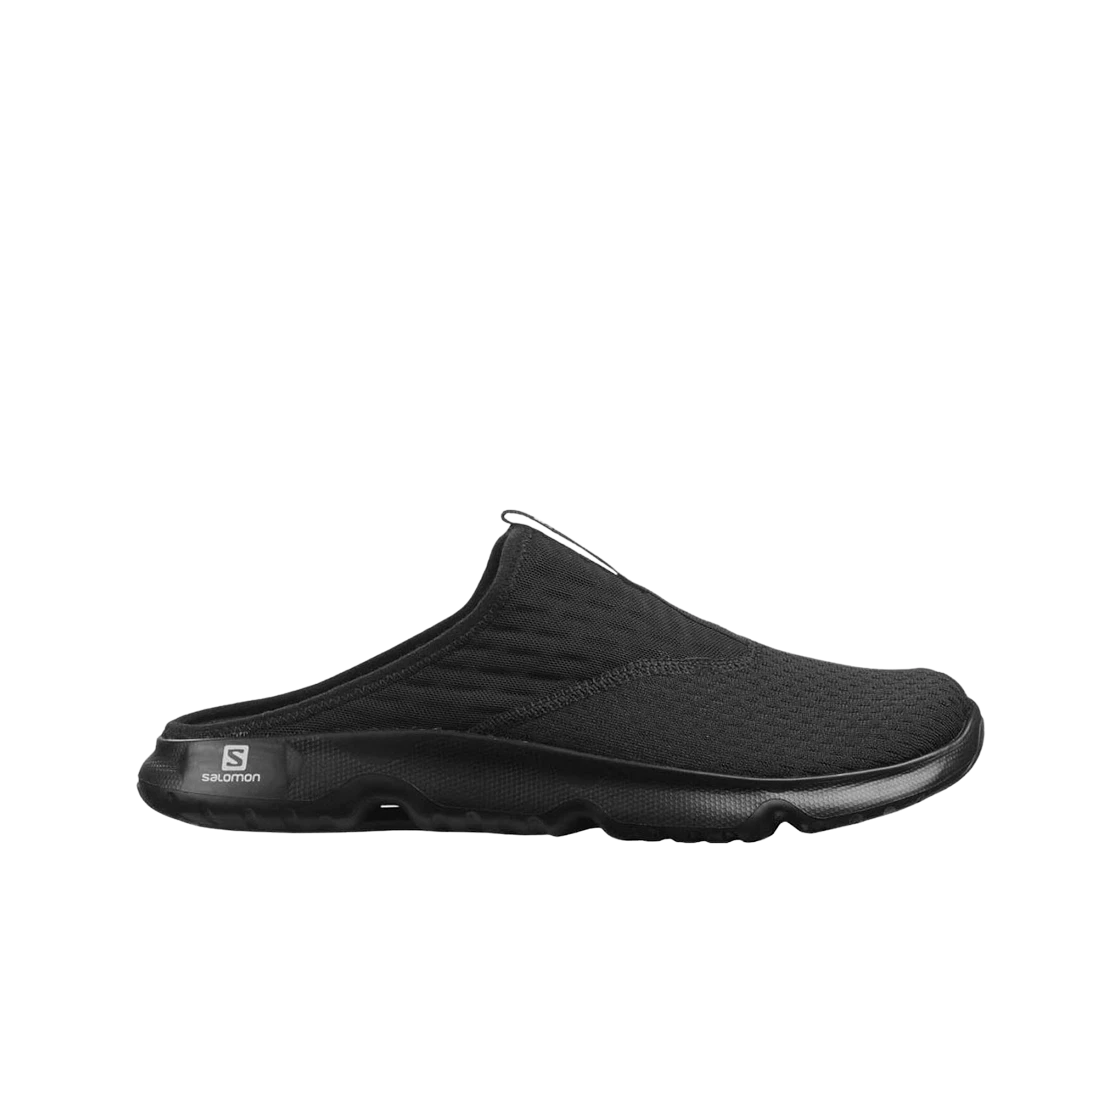 SASOM  shoes Salomon Reelax Slide 5.0 Black Check the latest price now!